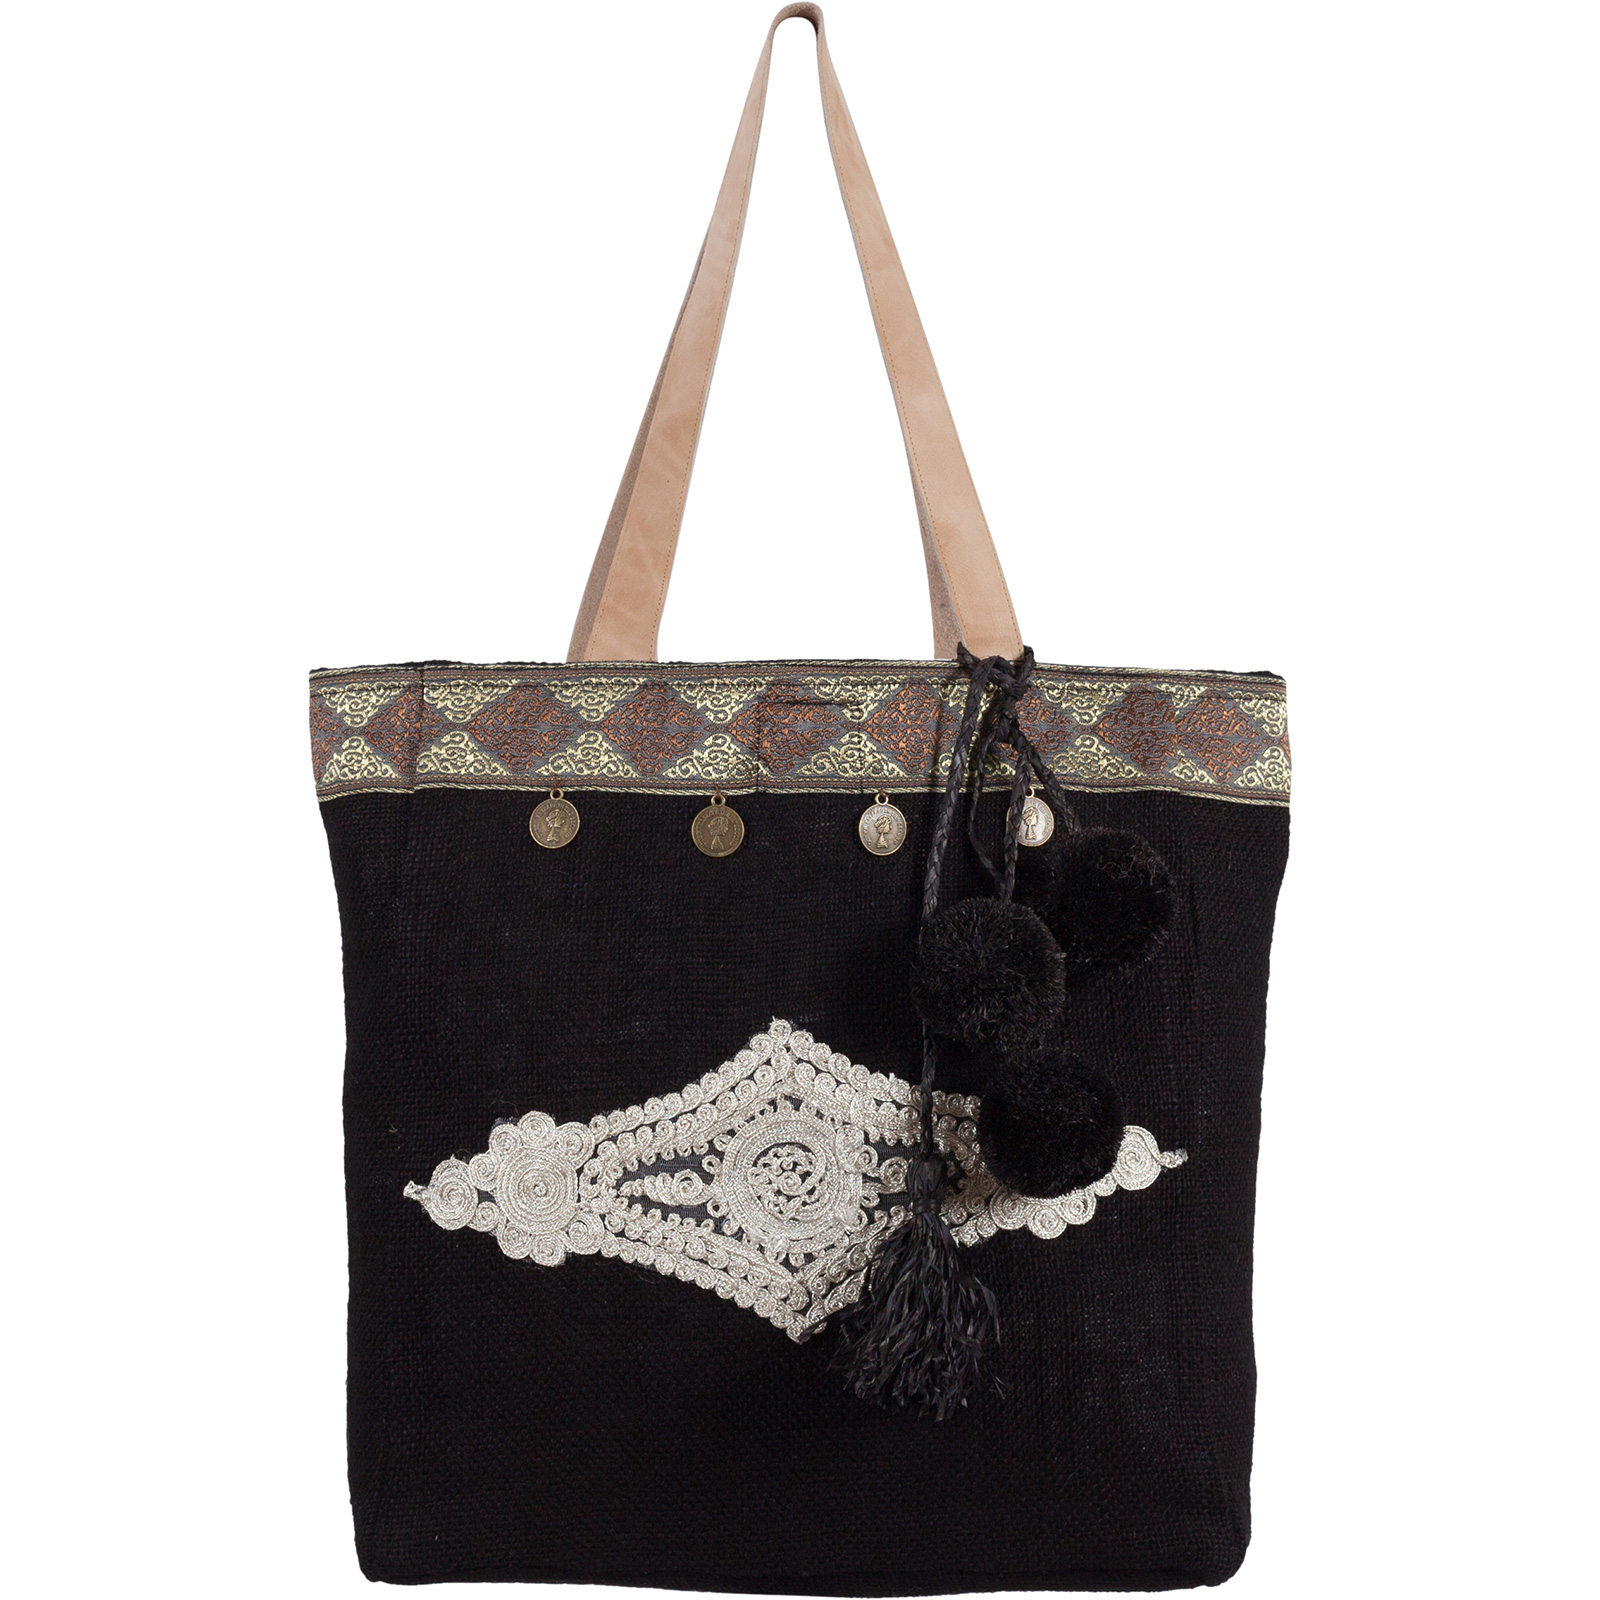 Bag Small Black Burlap Bag With Tassels - Mini Cabas Sultane Black